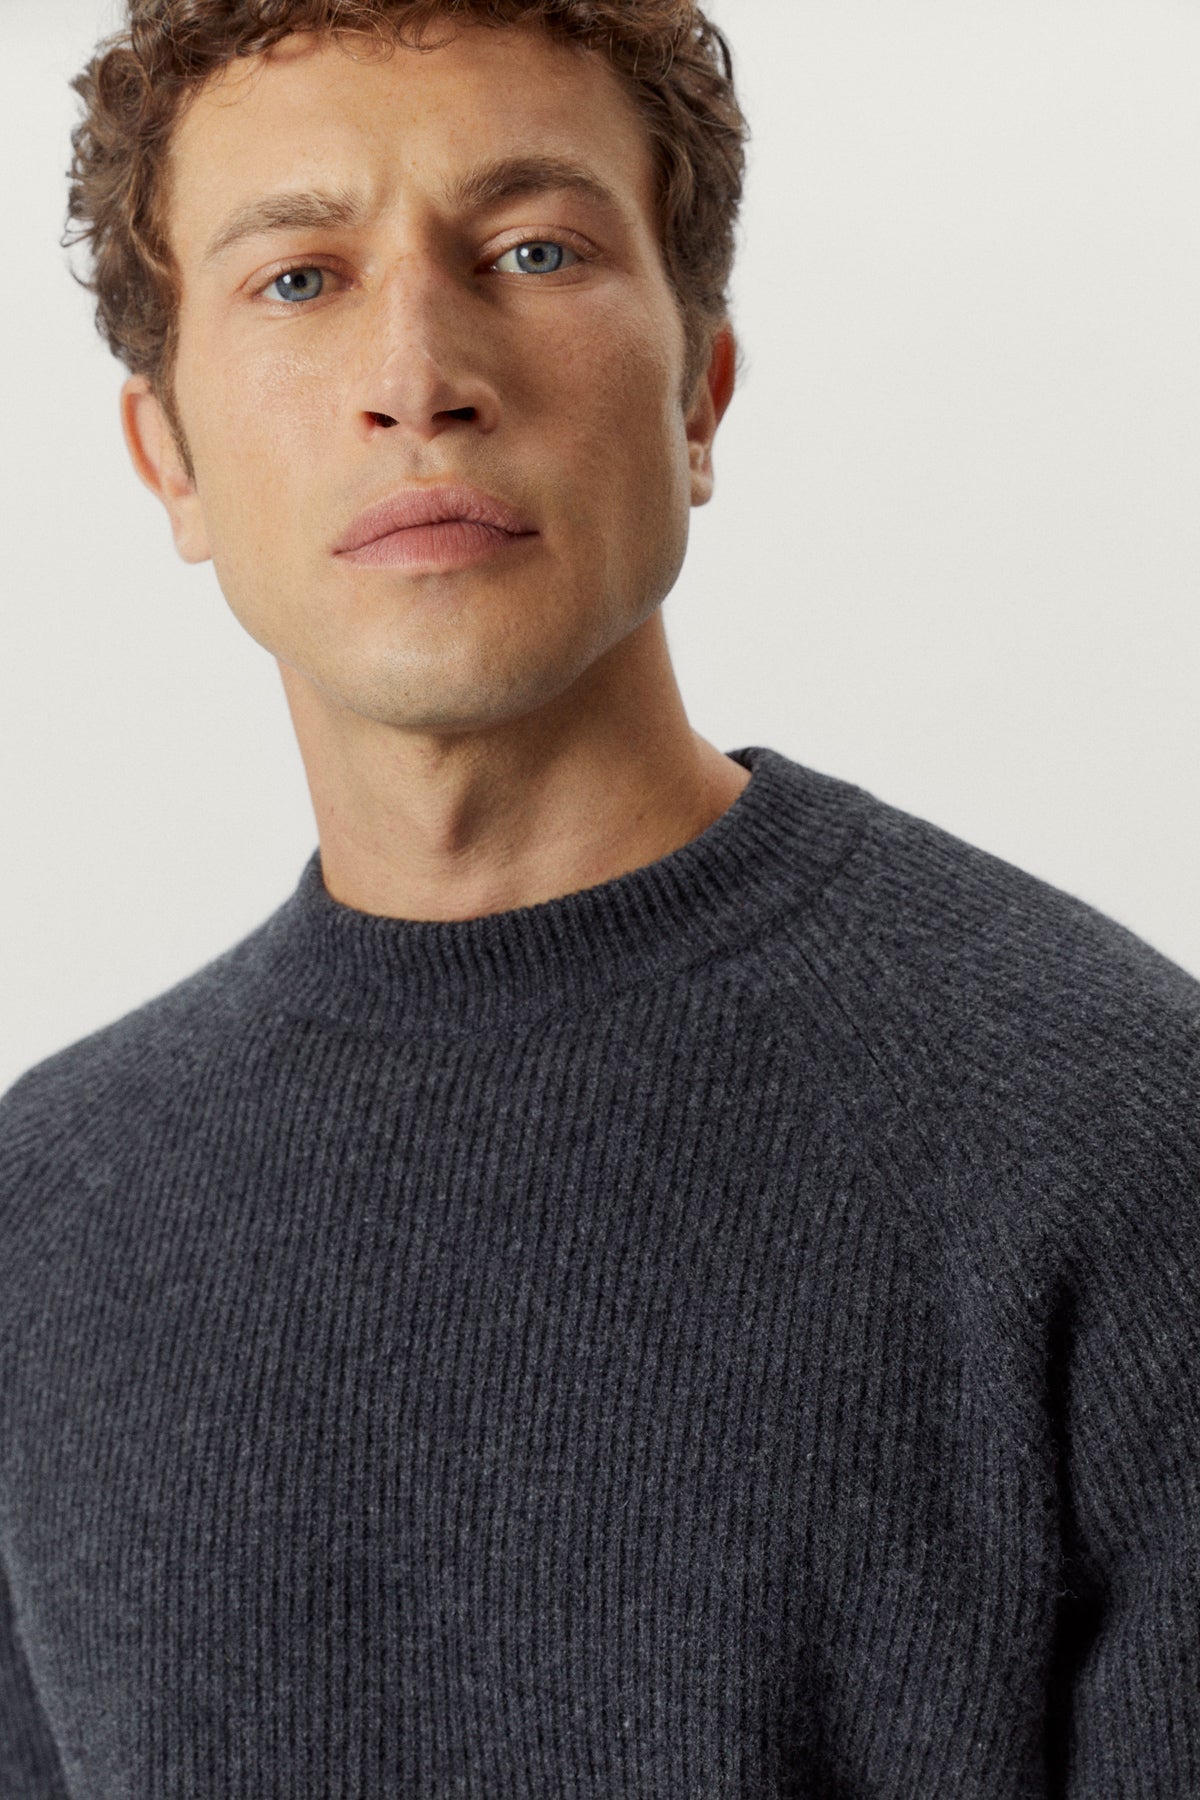 the woolen perkins sweater ash grey